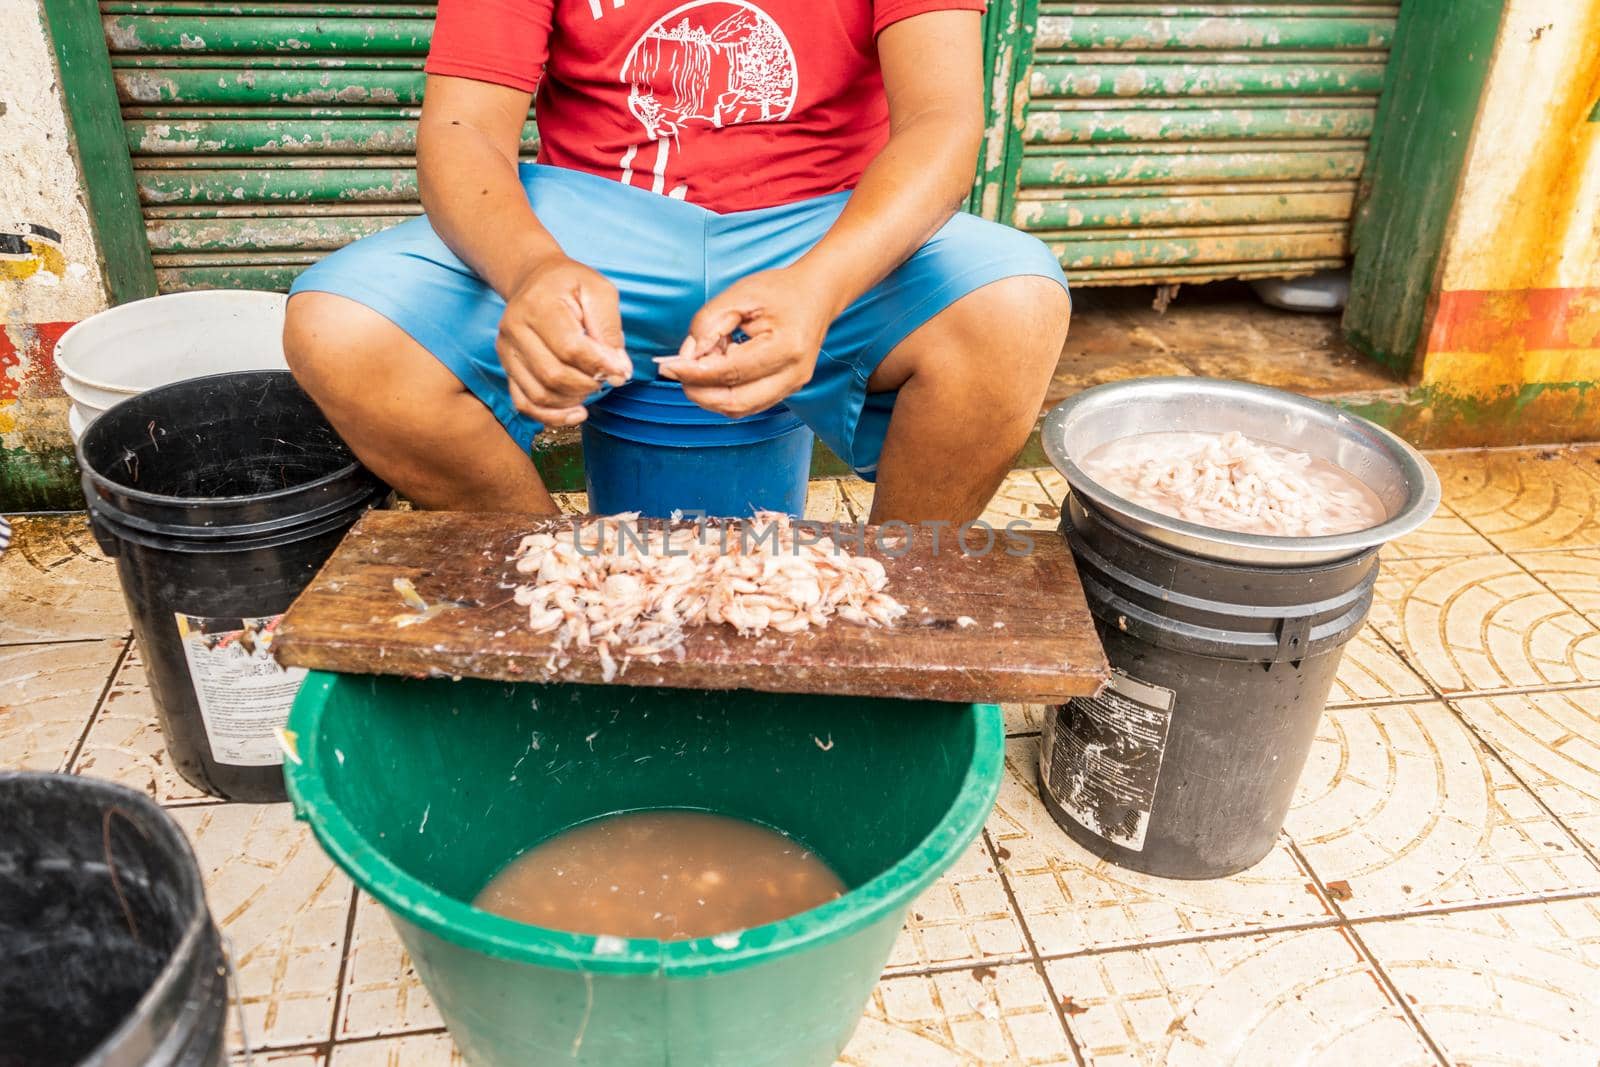 Unrecognizable man peeling shrimp in the street of a seafood market by cfalvarez